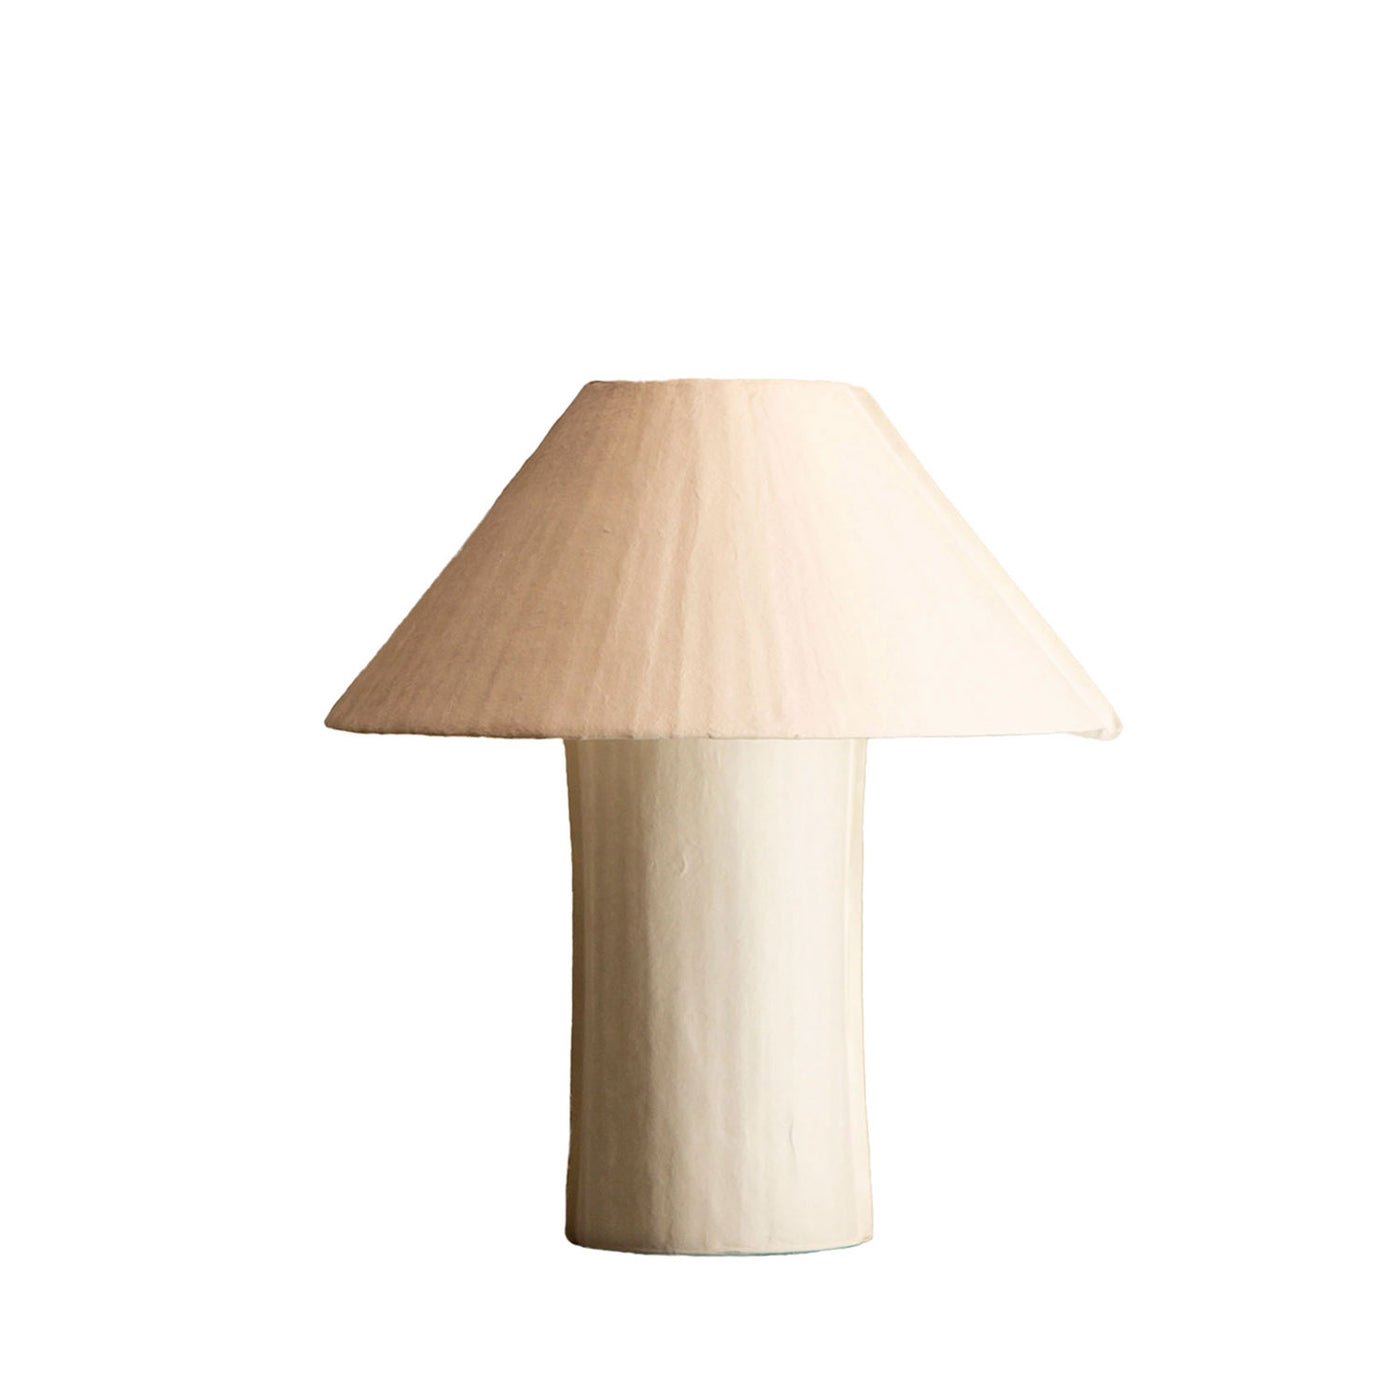 DD paper lamp